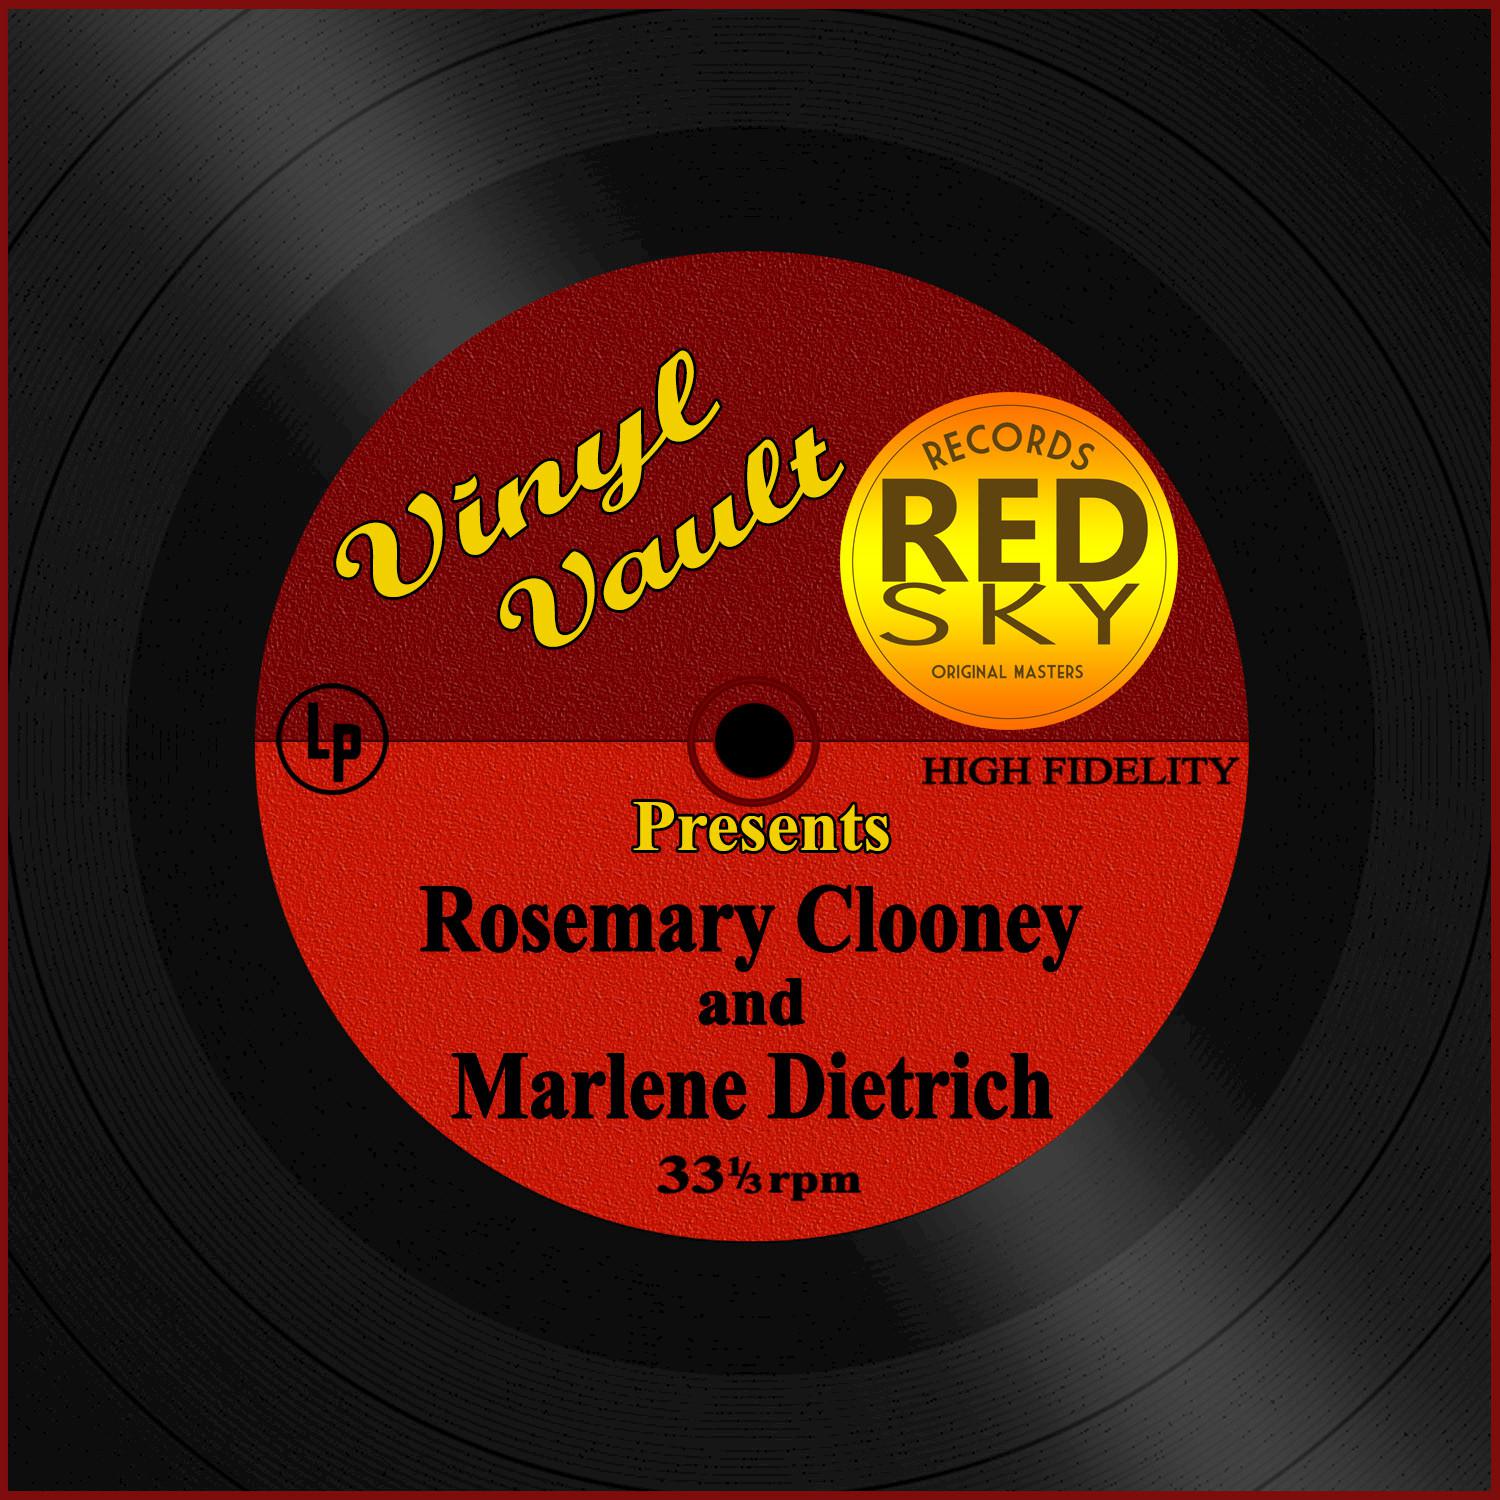 Vinyl Vault Presents Rosemary Clooney and Marlene Dietrich